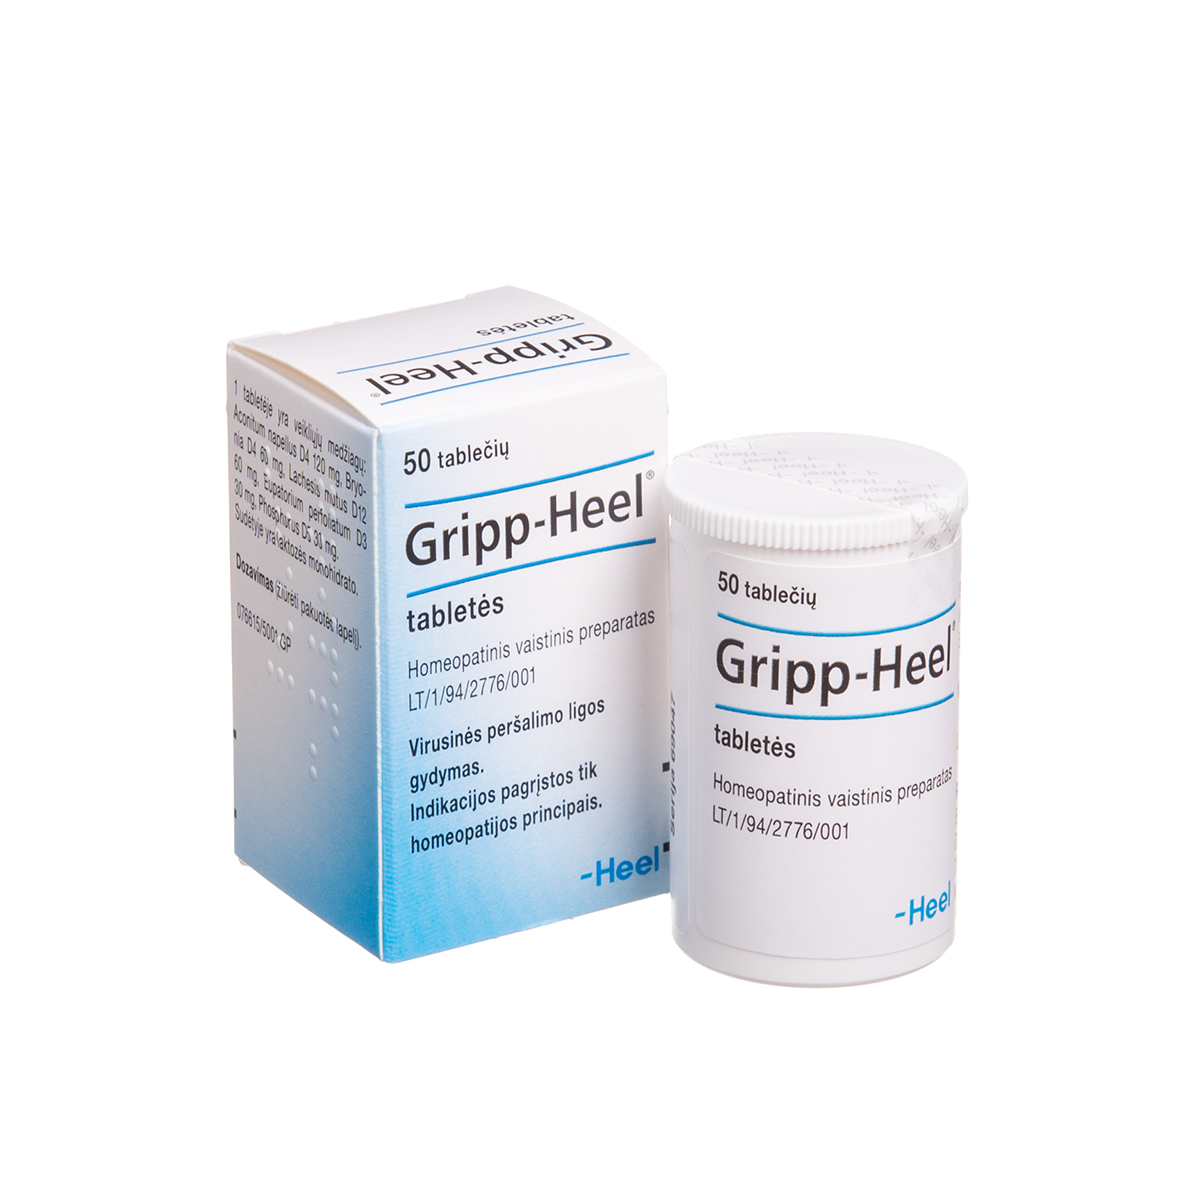 GRIPP-HEEL, tabletės, N50